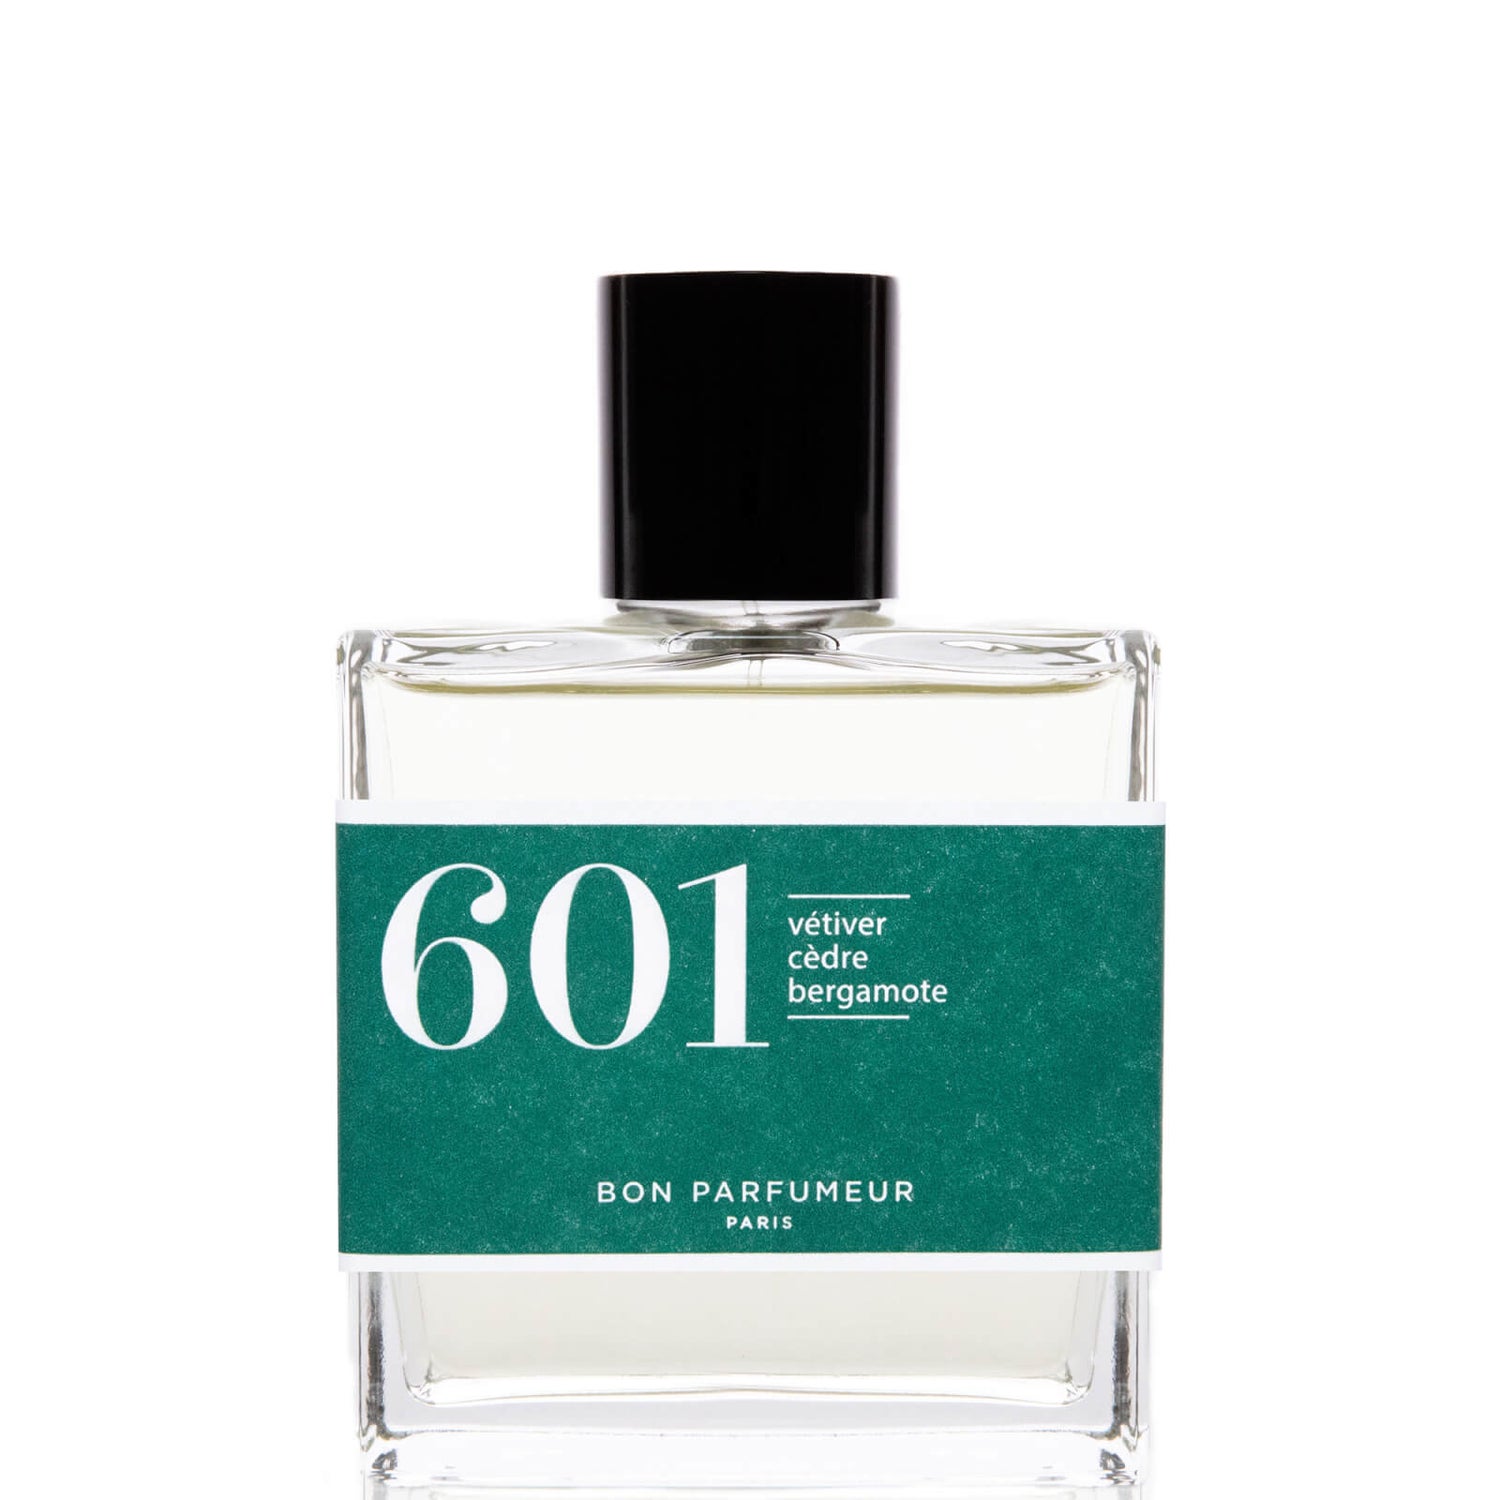 Bon Parfumeur 601 Vetiver Cedar Bergamot Eau de Parfum - 100 ml